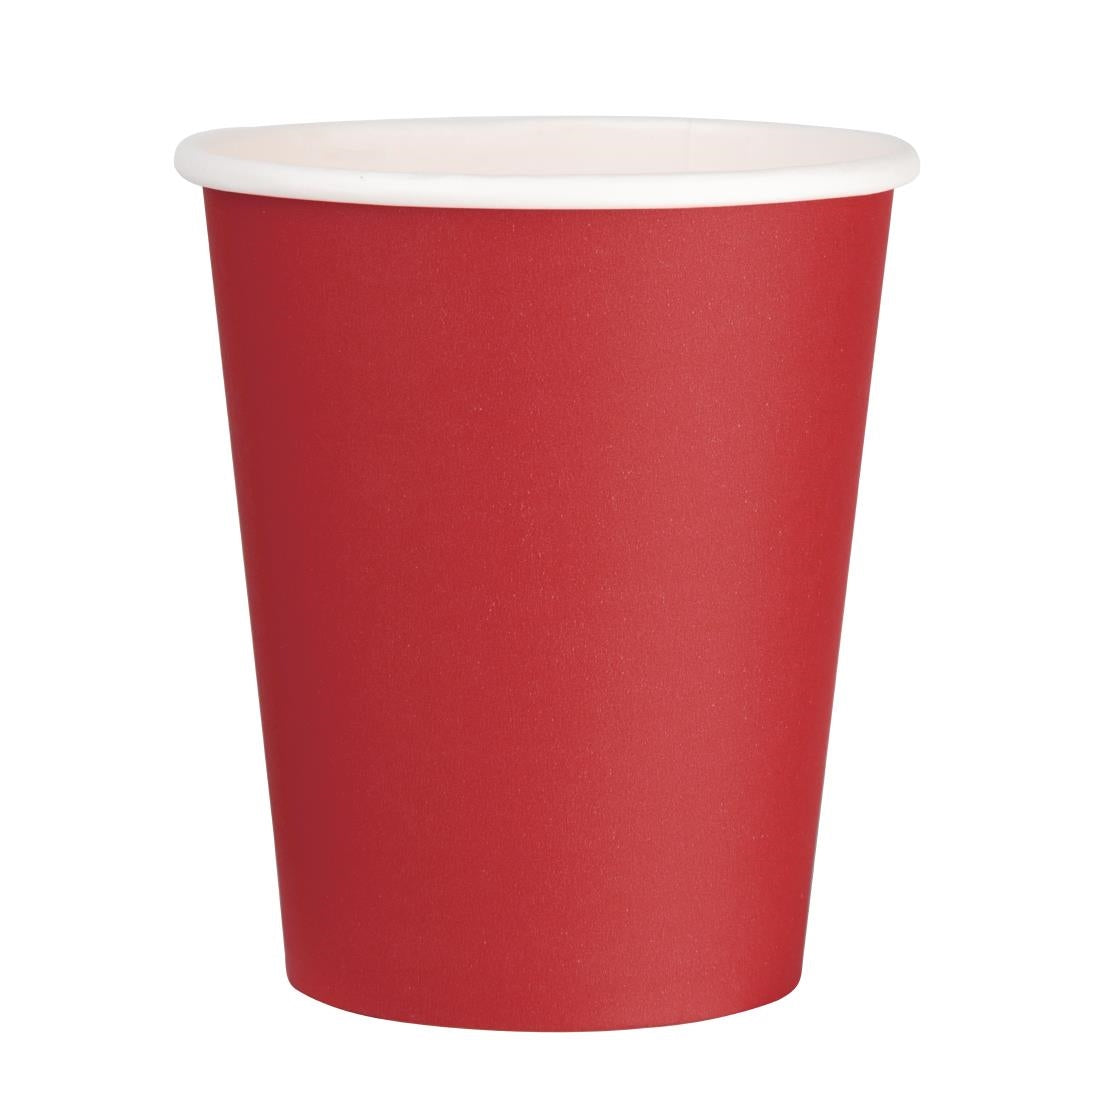 Fiesta Recyclable Single Wall Takeaway Coffee Cups Red 225ml / 8oz (Pack of 50)